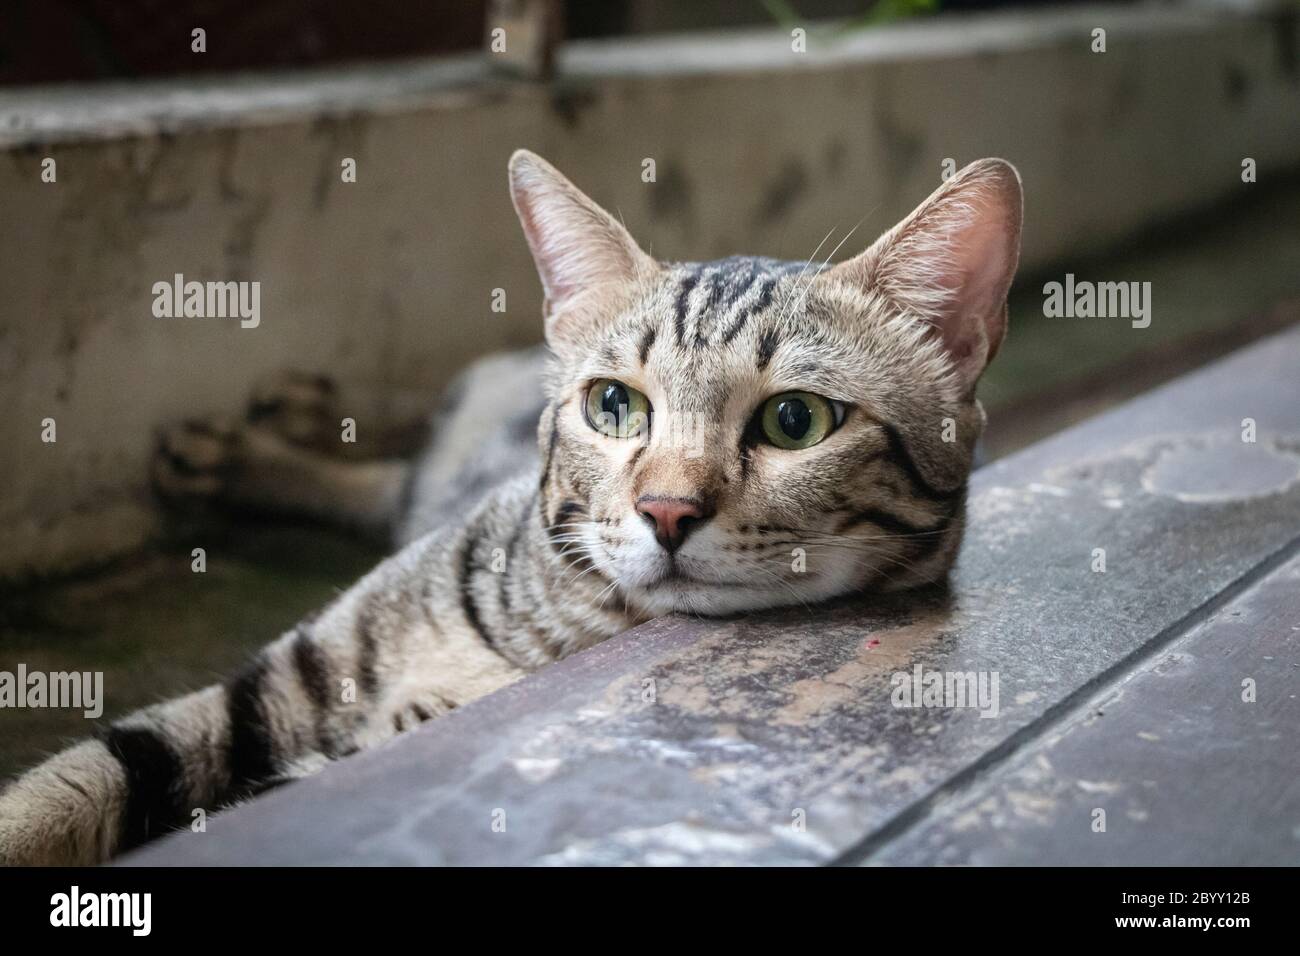 The cat AMERICAN SHORTHAIR strains, head resting, daytime wood floor Stock Photo